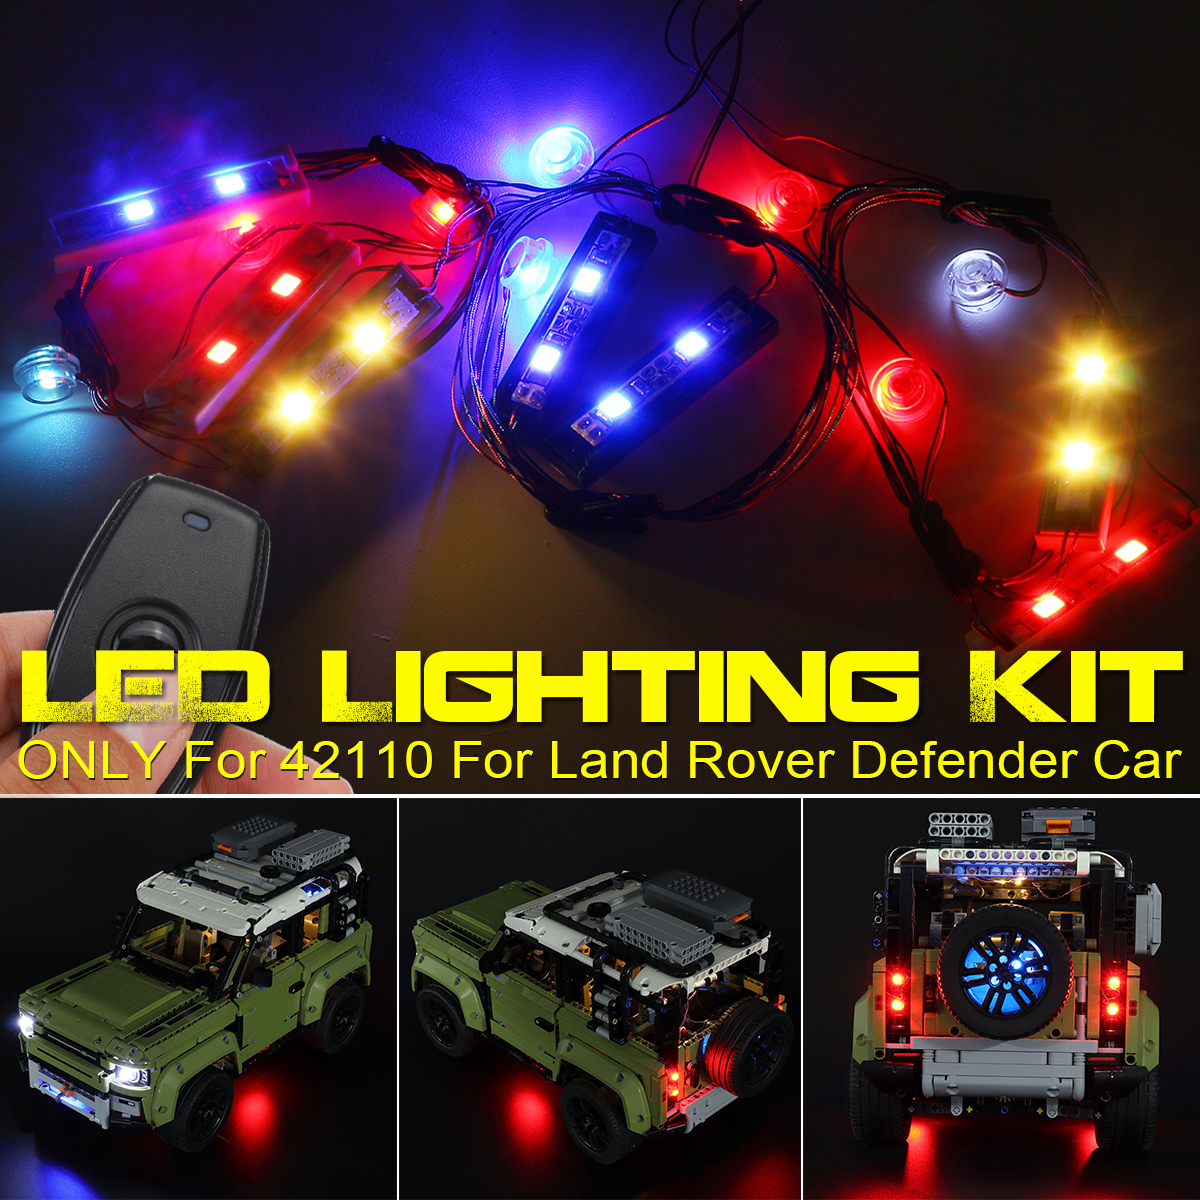 DIY-USB-LED-Strip-Light-Kit-ONLY-For-LEGO-42110-For-Land-Rover-Defender-Car-Bricks-Toy-With-Remote-C-1658165-1